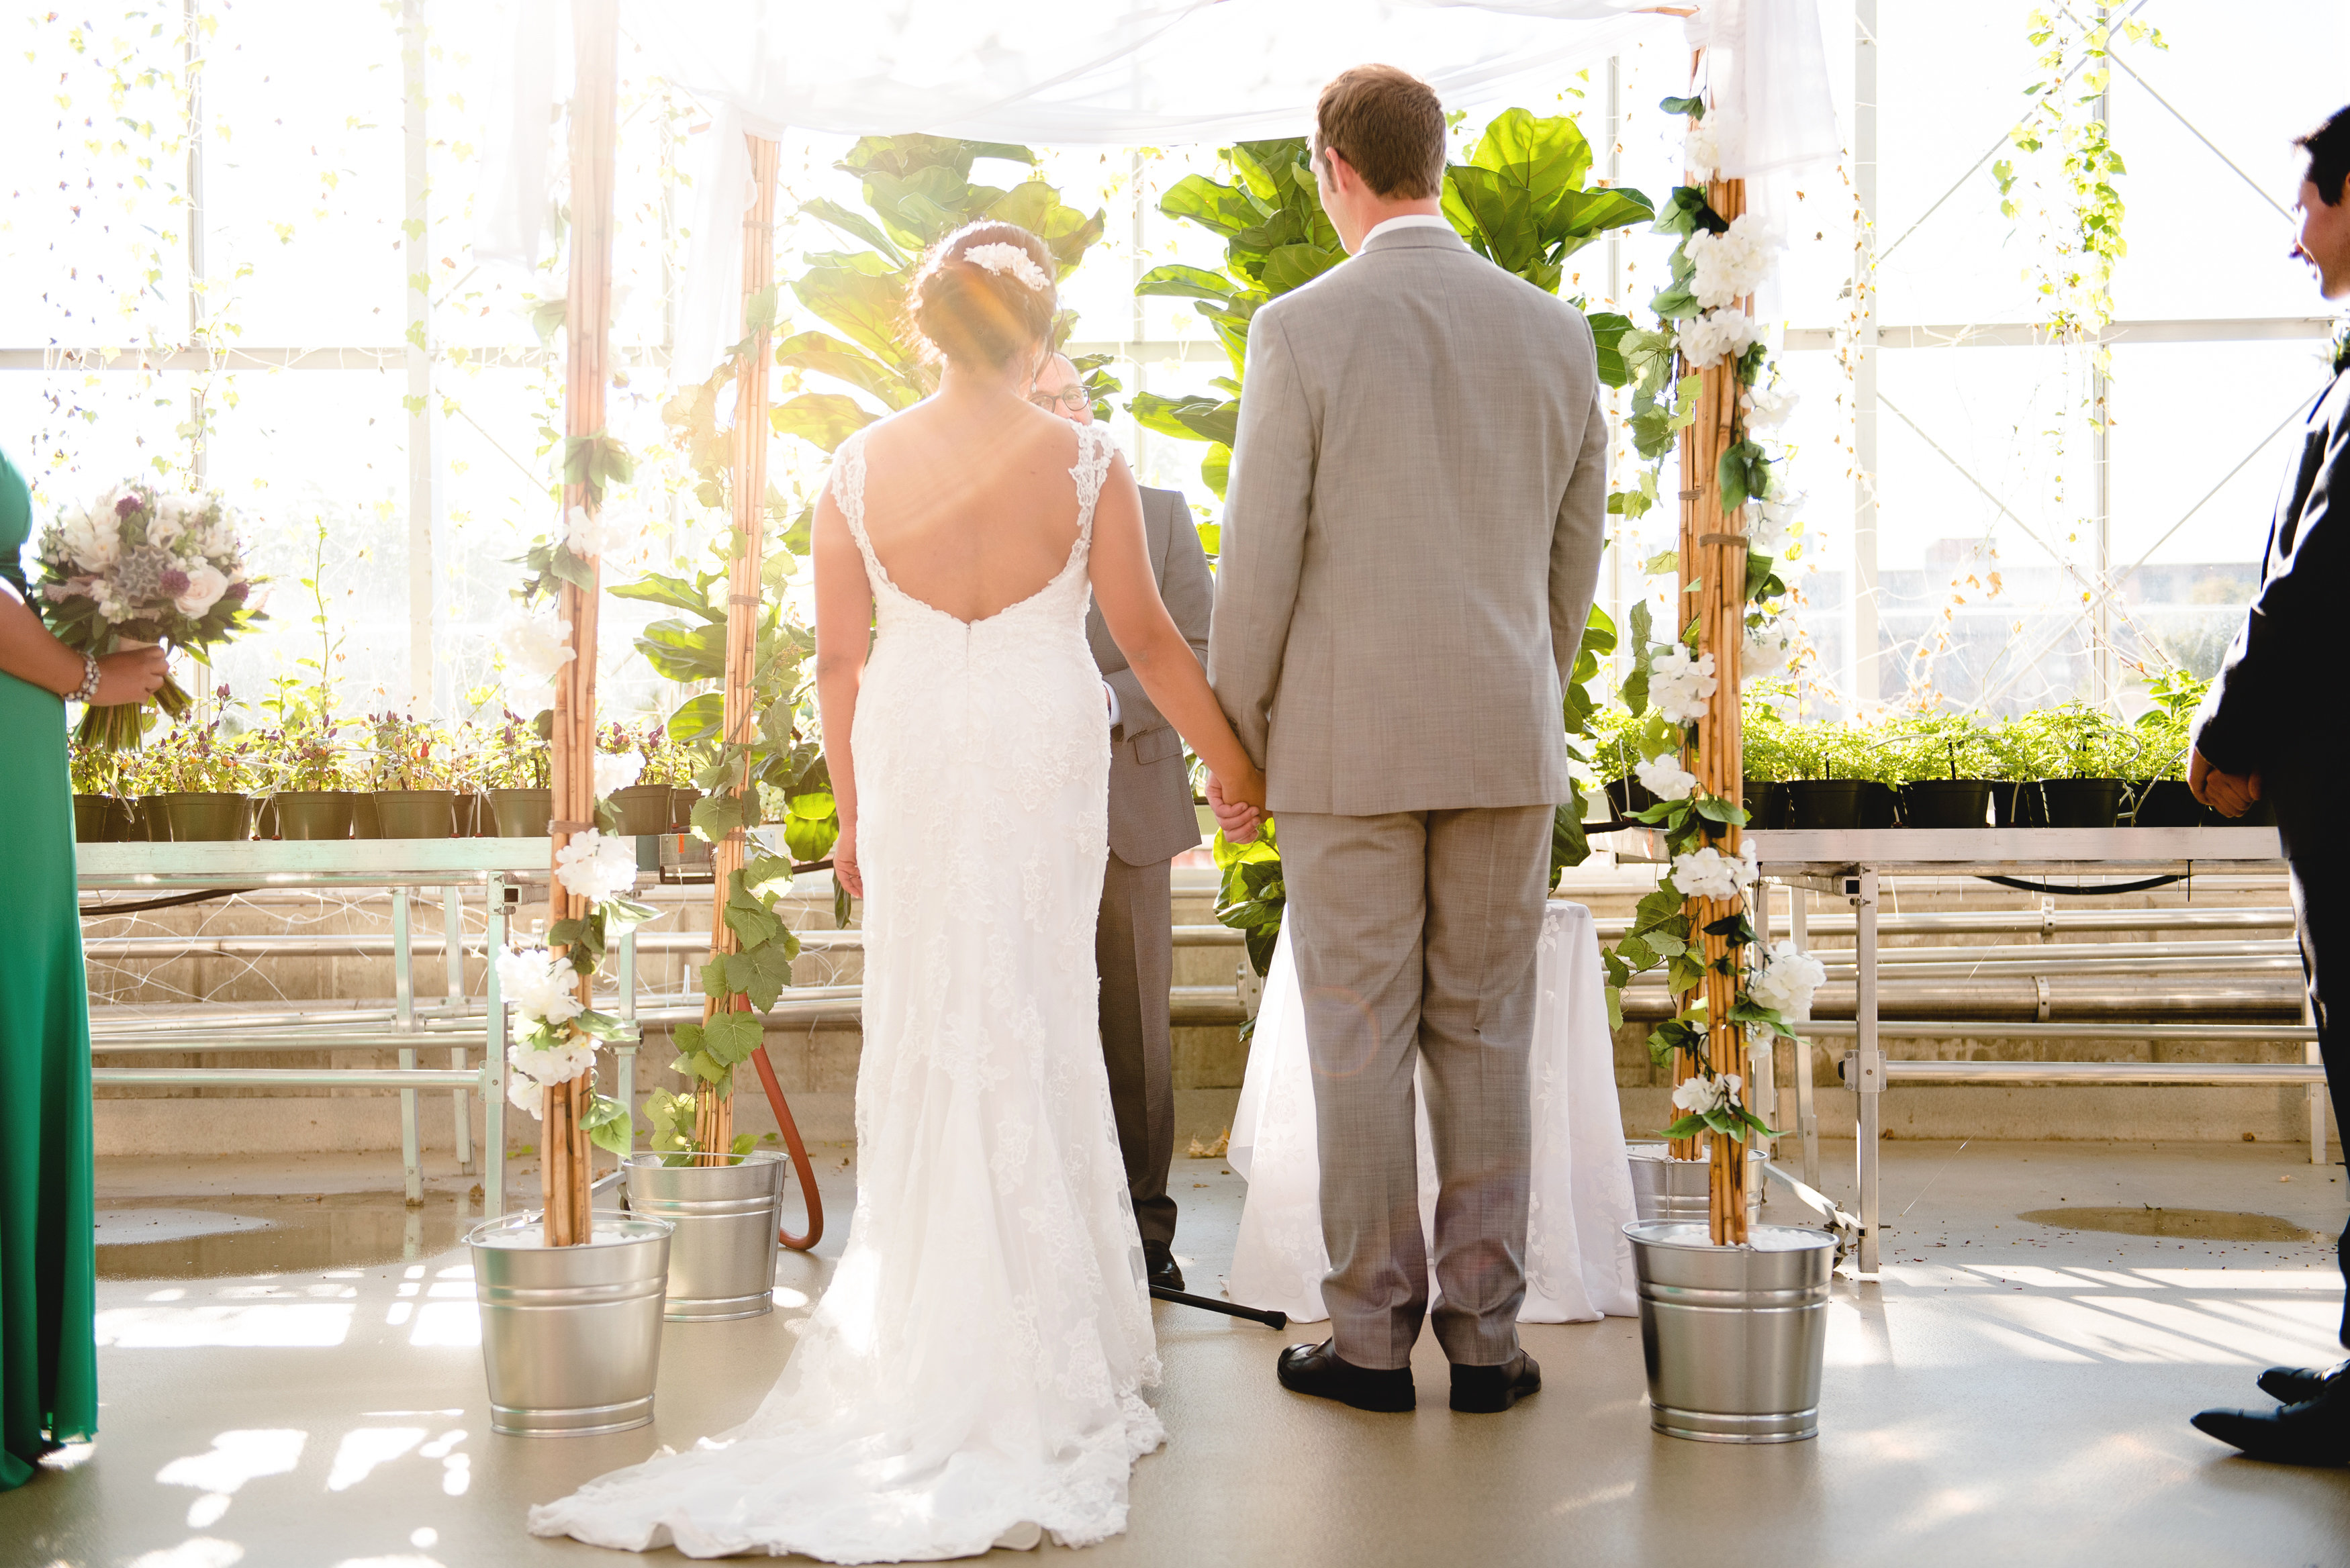 JS Weddings & Events, Grand Rapids Wedding Planner and Floral Designer - Grand Rapids Downtown Market Natural Greenhouse Conservatory Wedding